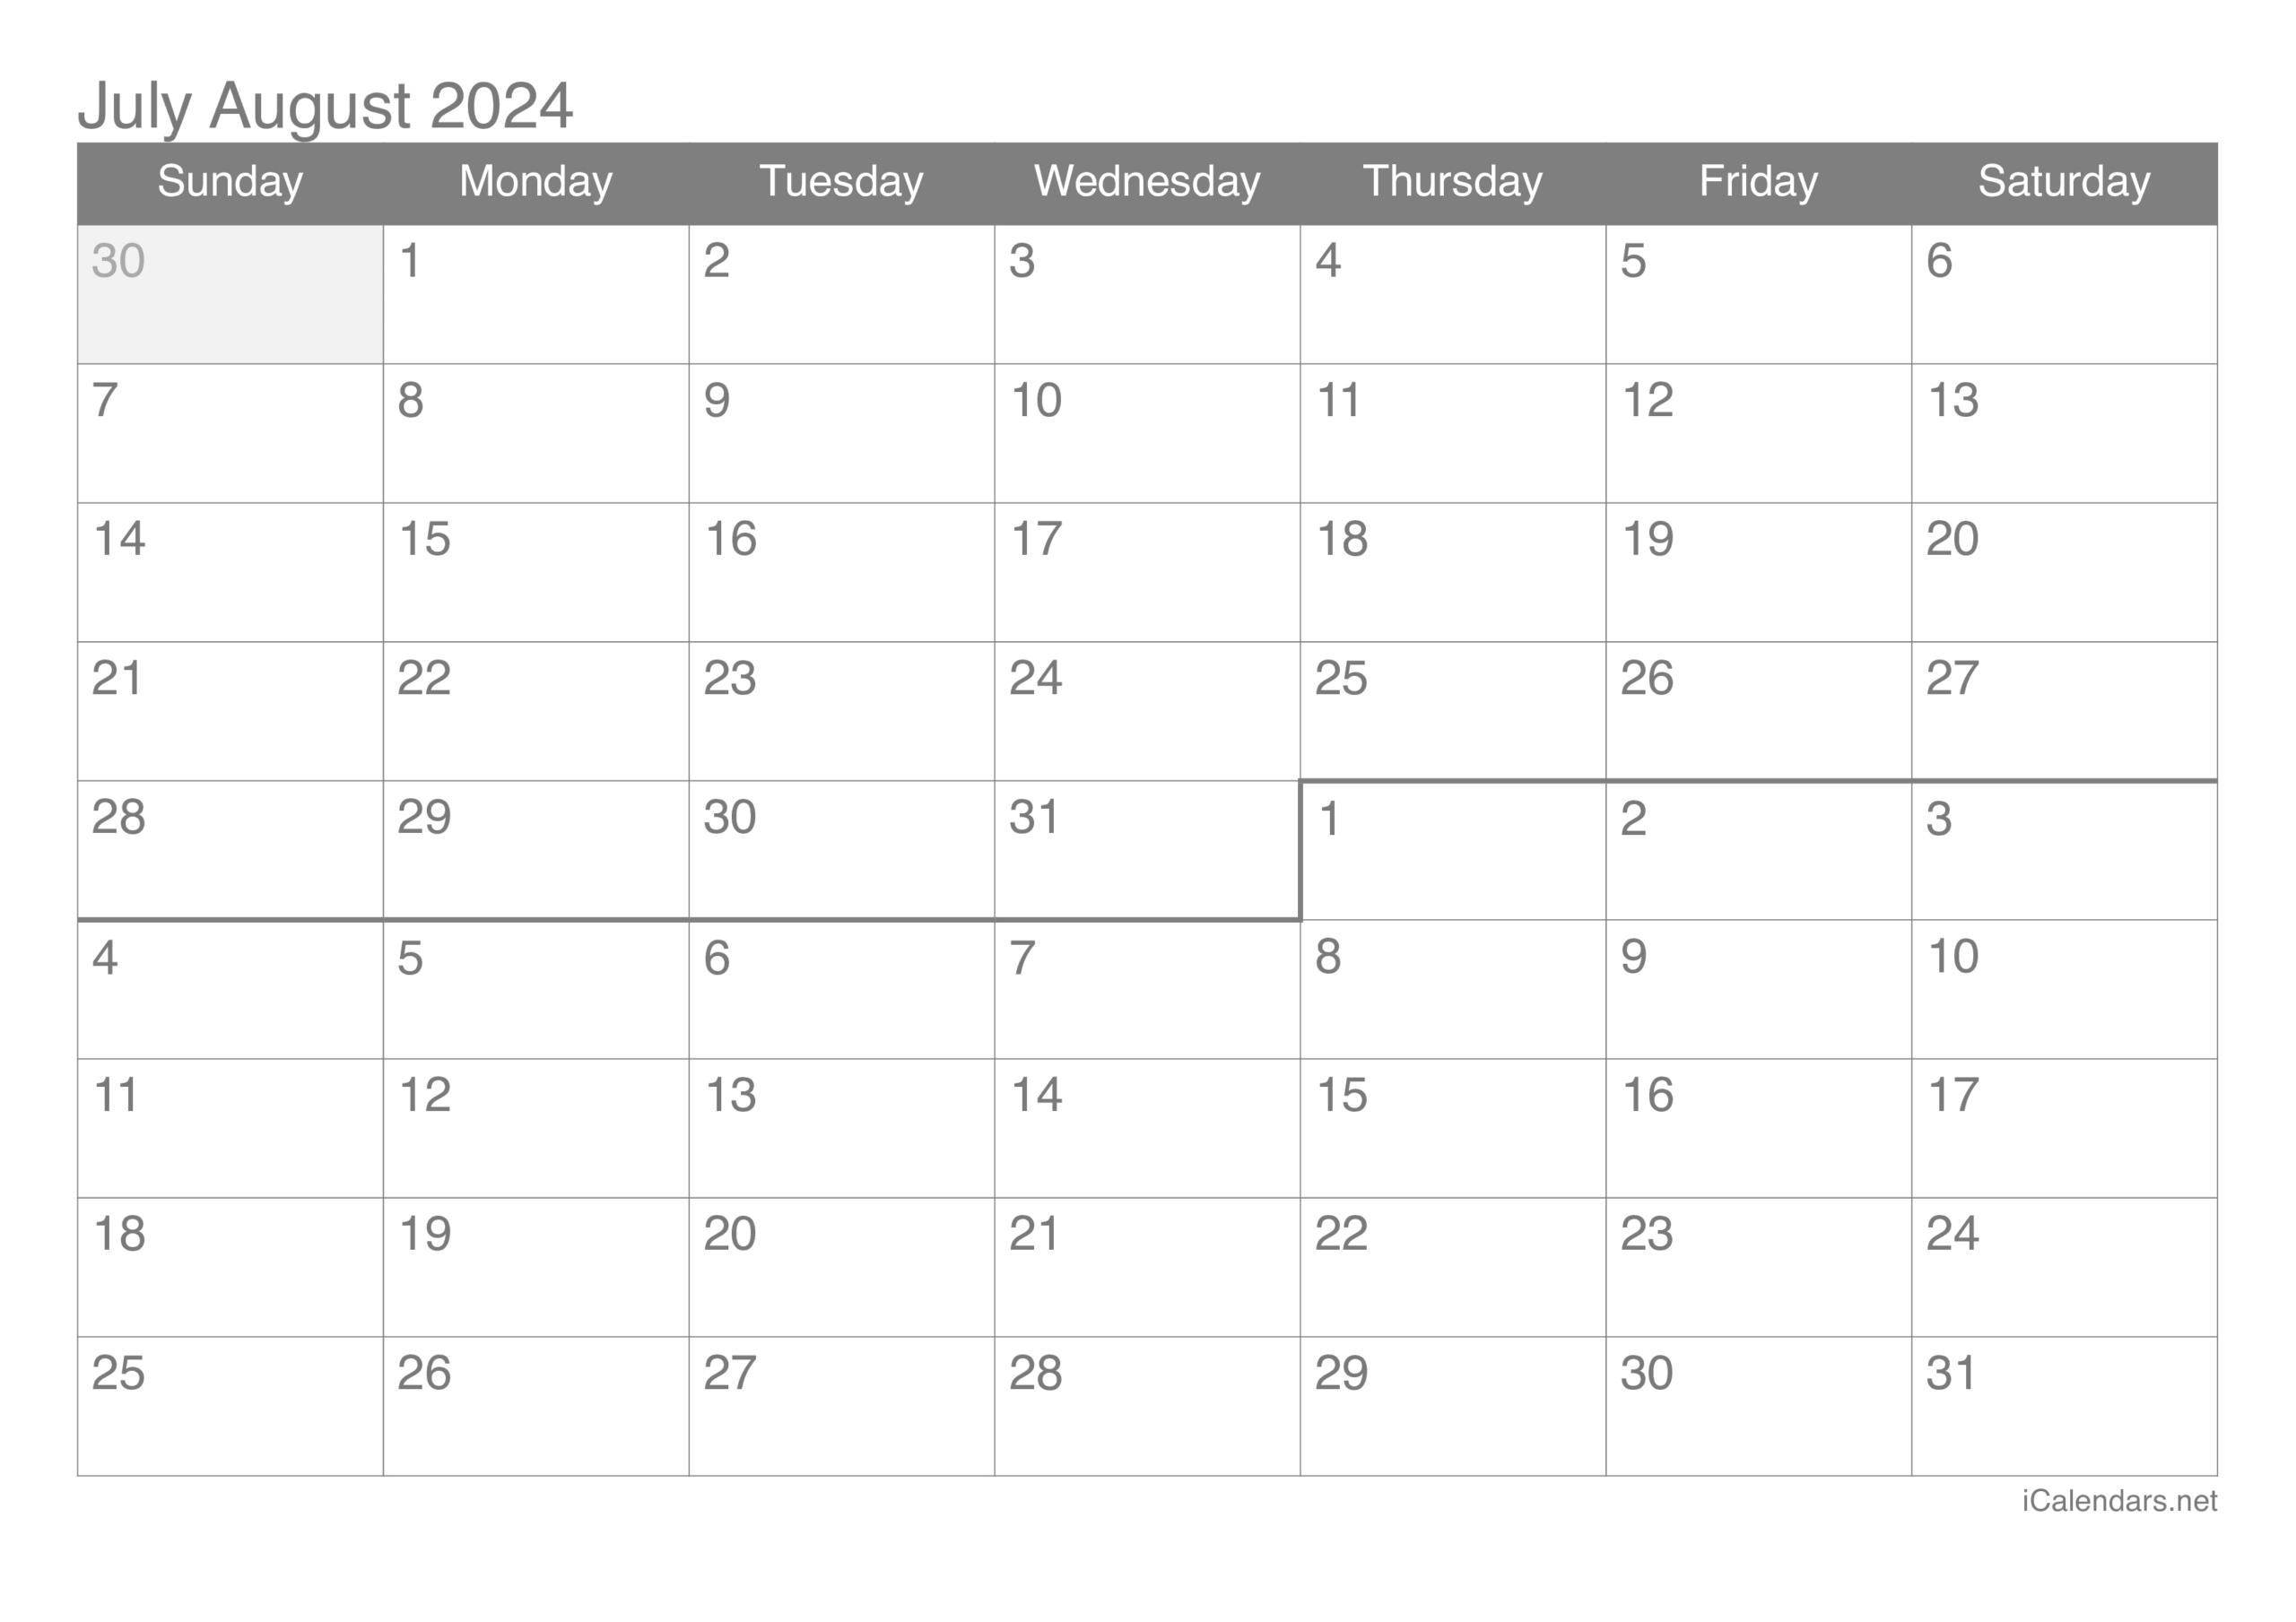 July And August 2024 Printable Calendar regarding Printable Calendar 2024 June July August